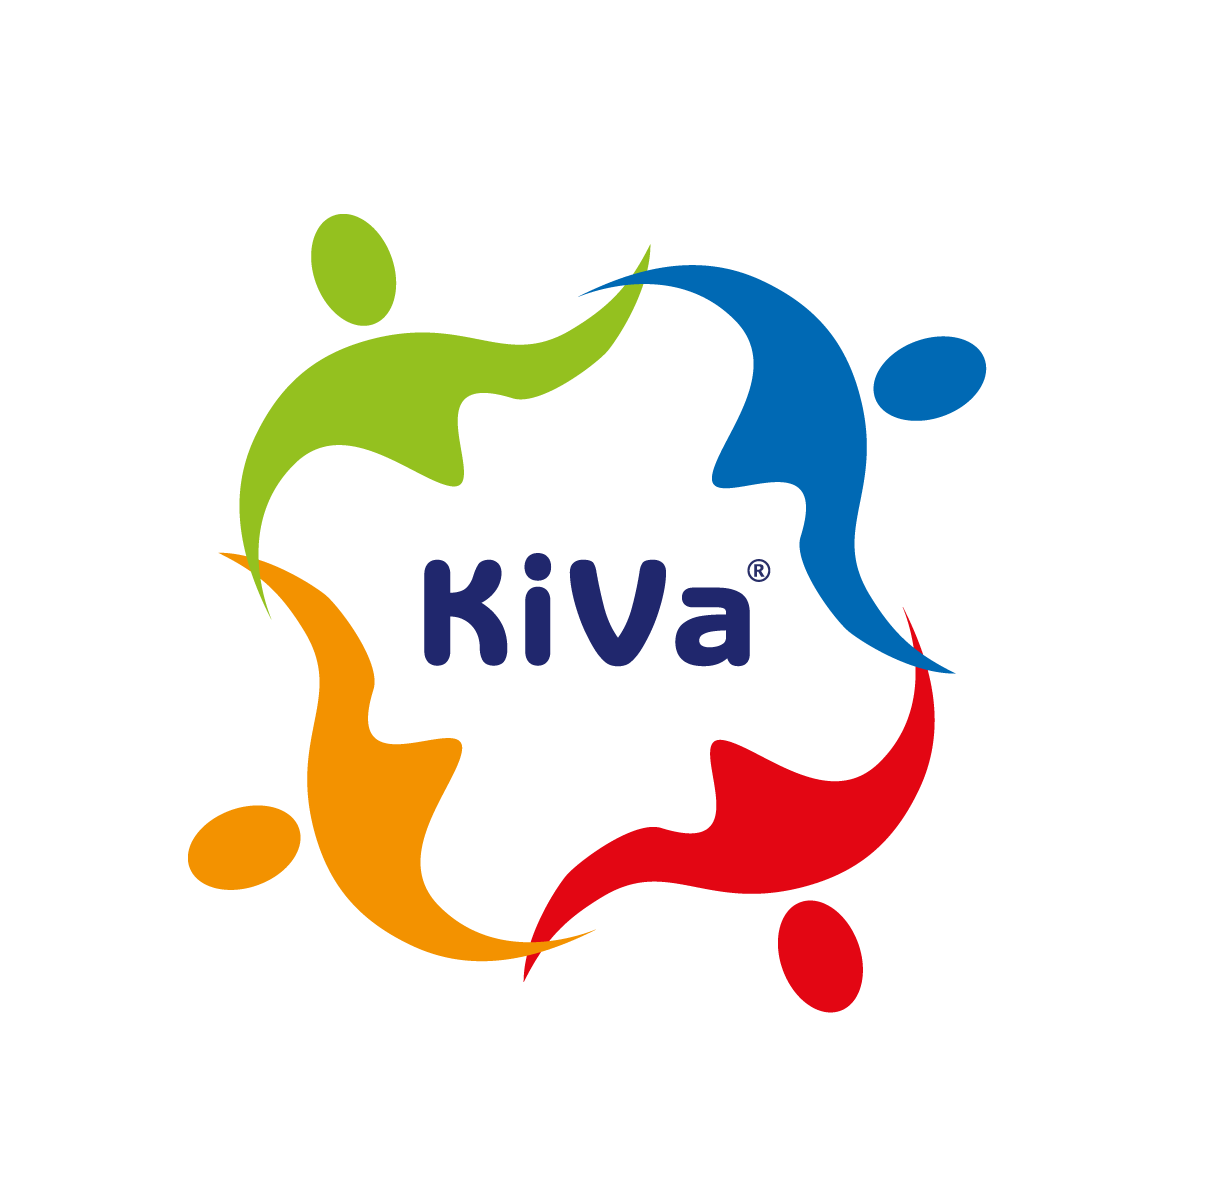 kiva-logo